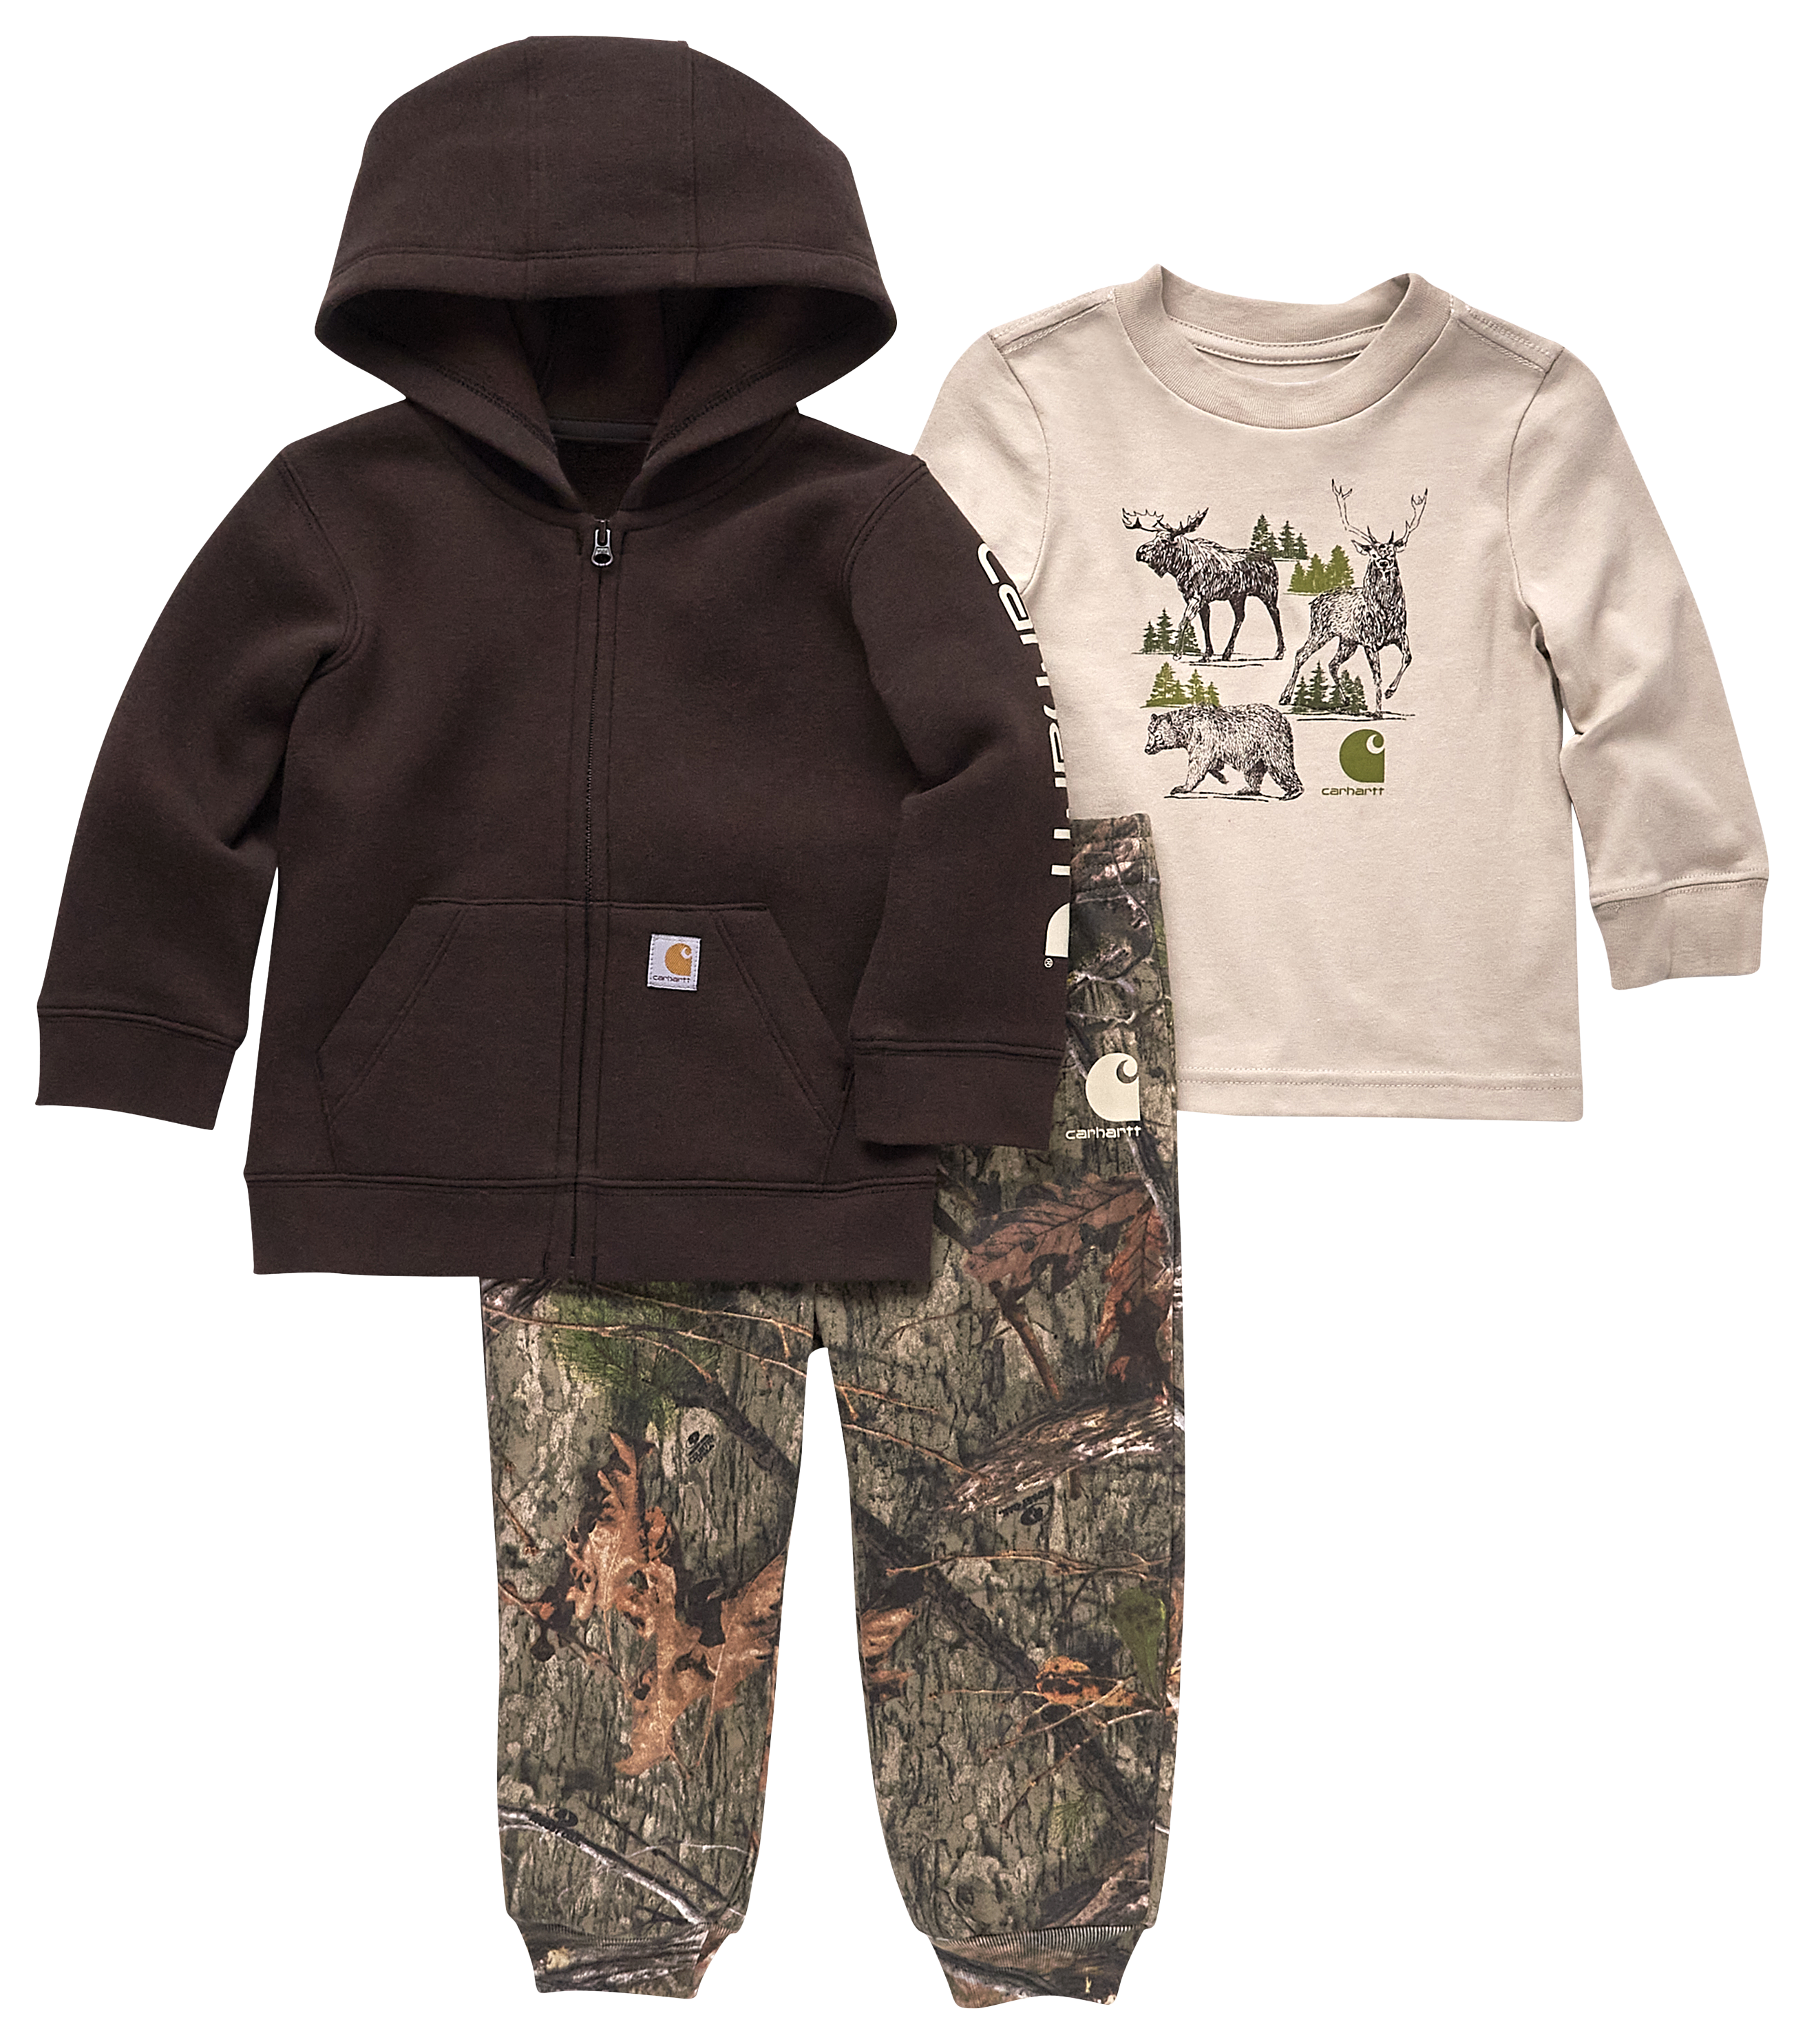 Carhartt Long-Sleeve T-Shirt, Jacket, and Fleece Pants 3-Piece Set for Babies - Mossy Oak Country DNA - 3 Months